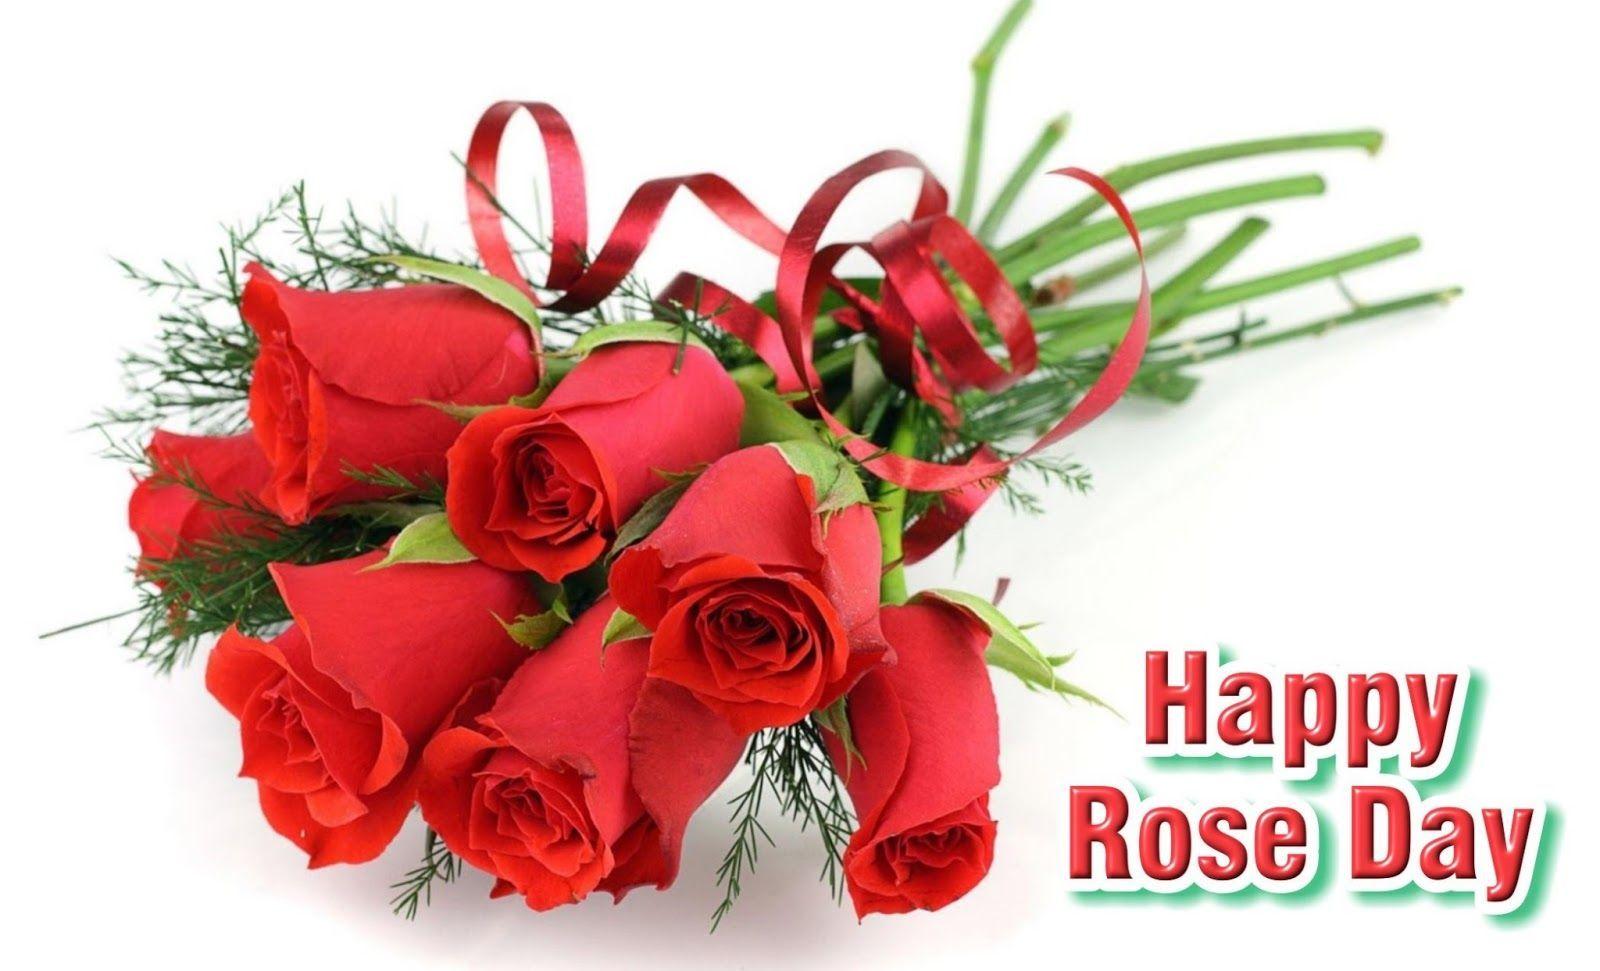 Happy Rose Day 2016